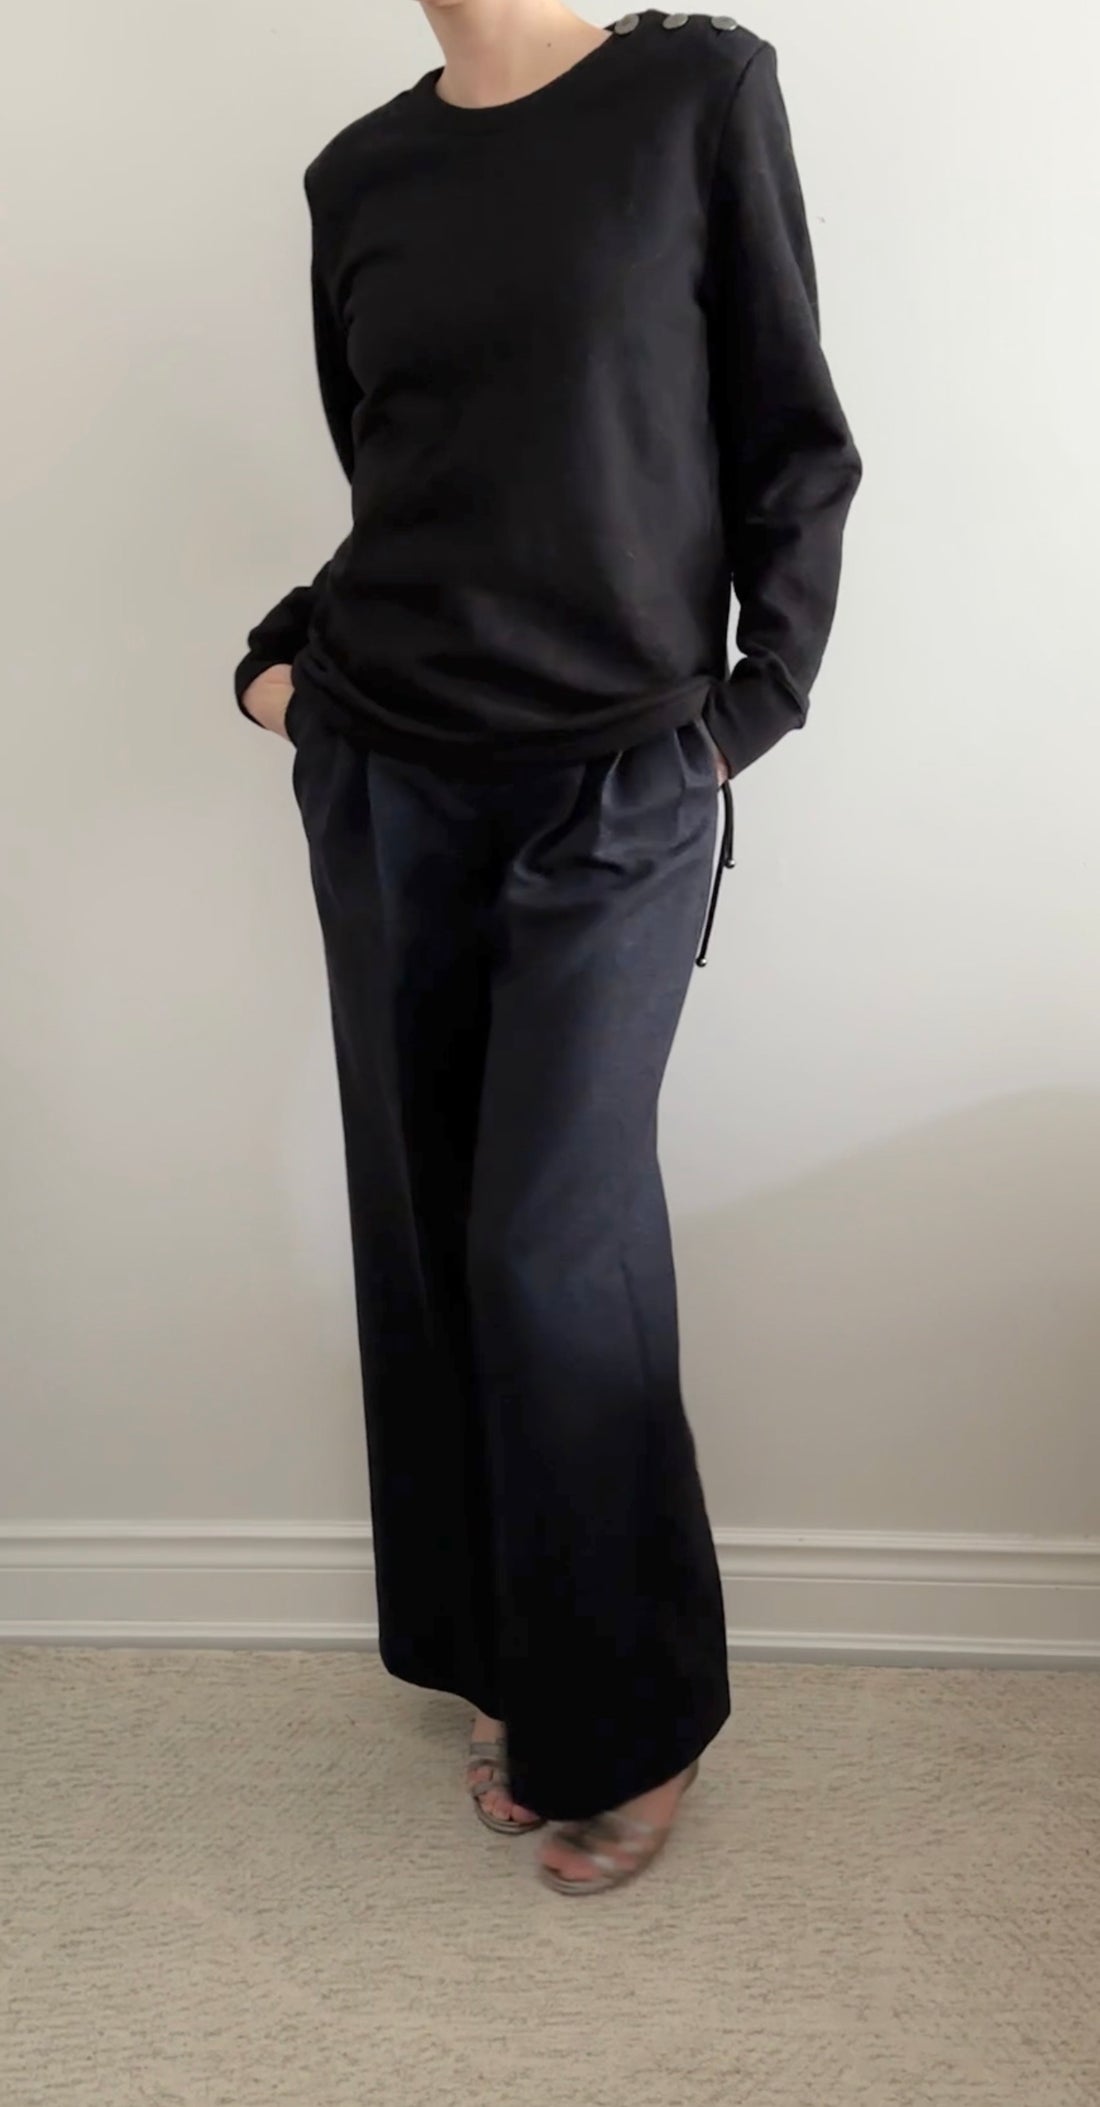 Chanel 18B Black Camelia Top Stitch Pullover Sweatshirt - FR40 / M